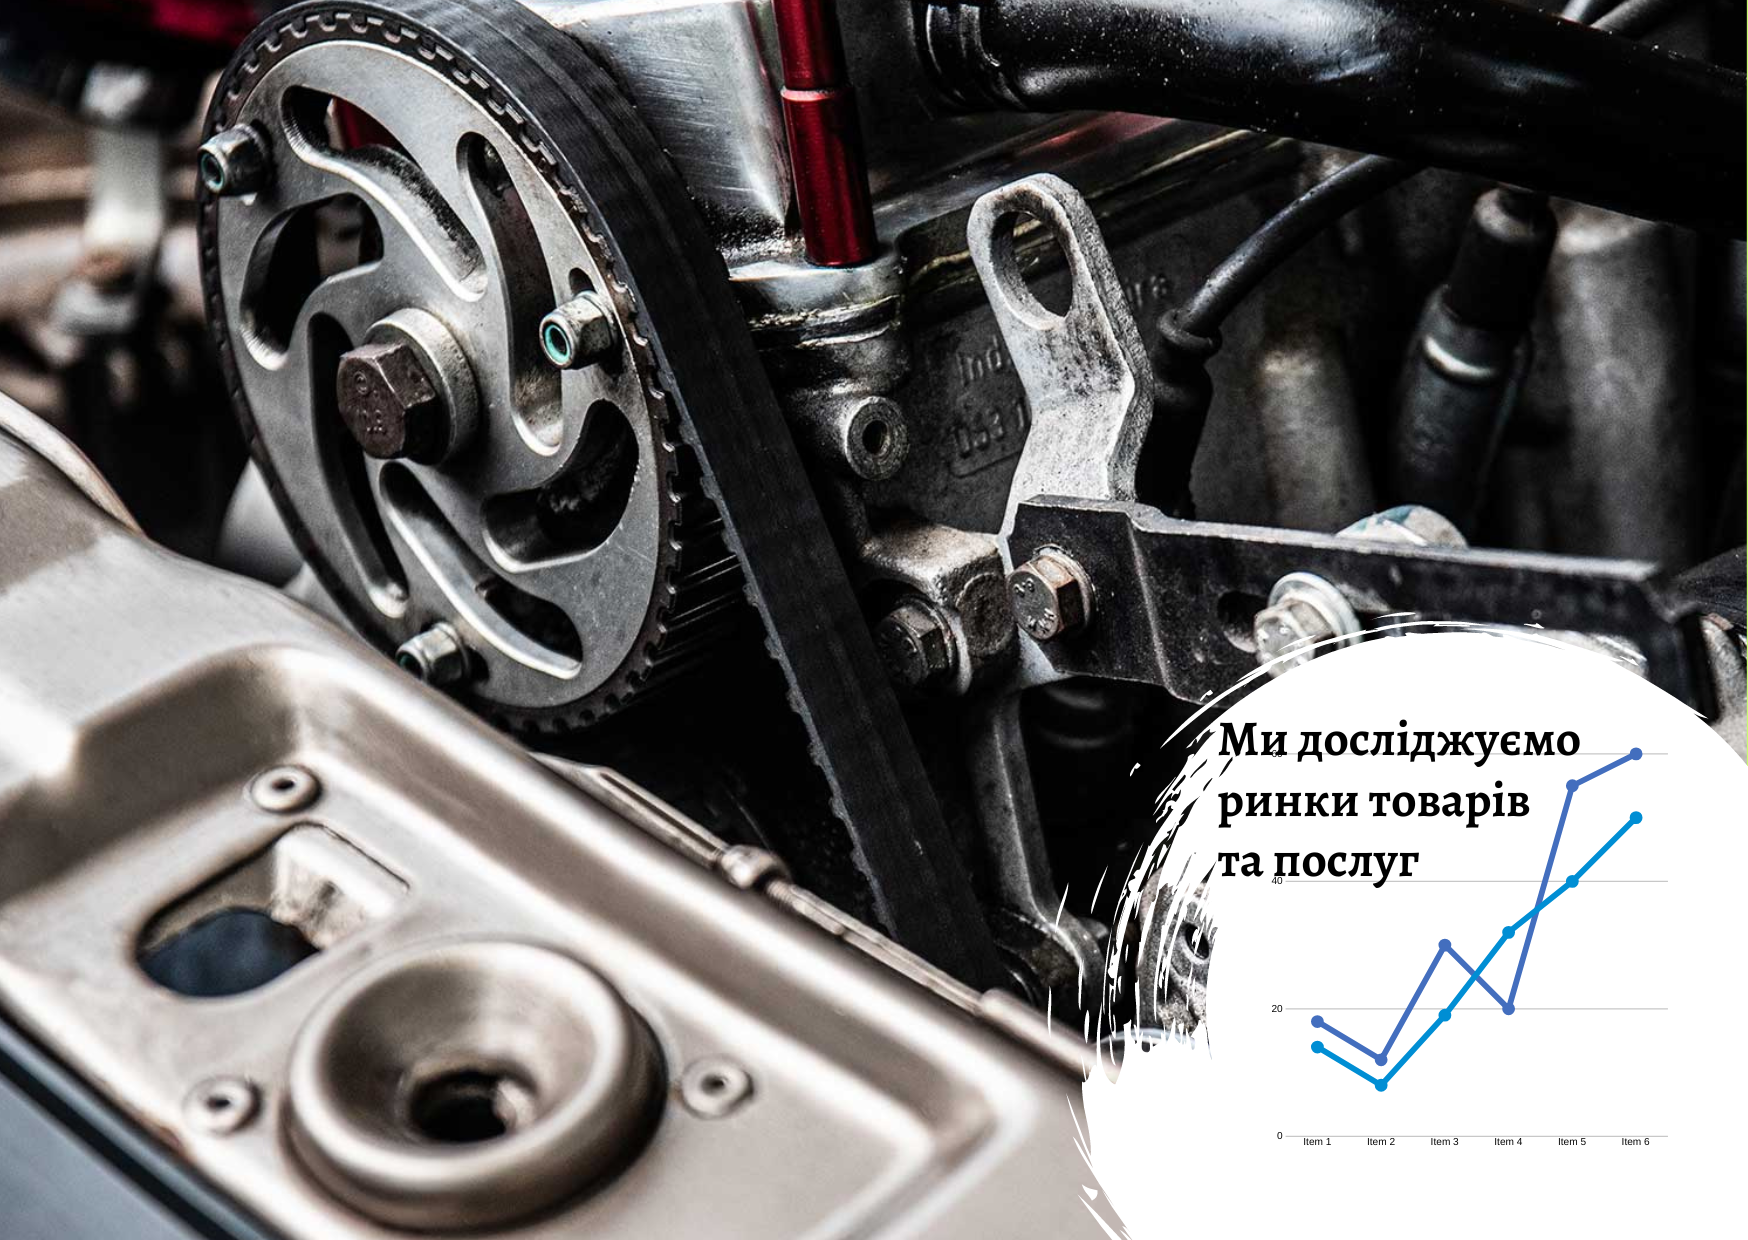 Ukrainian auto parts market: analytical report